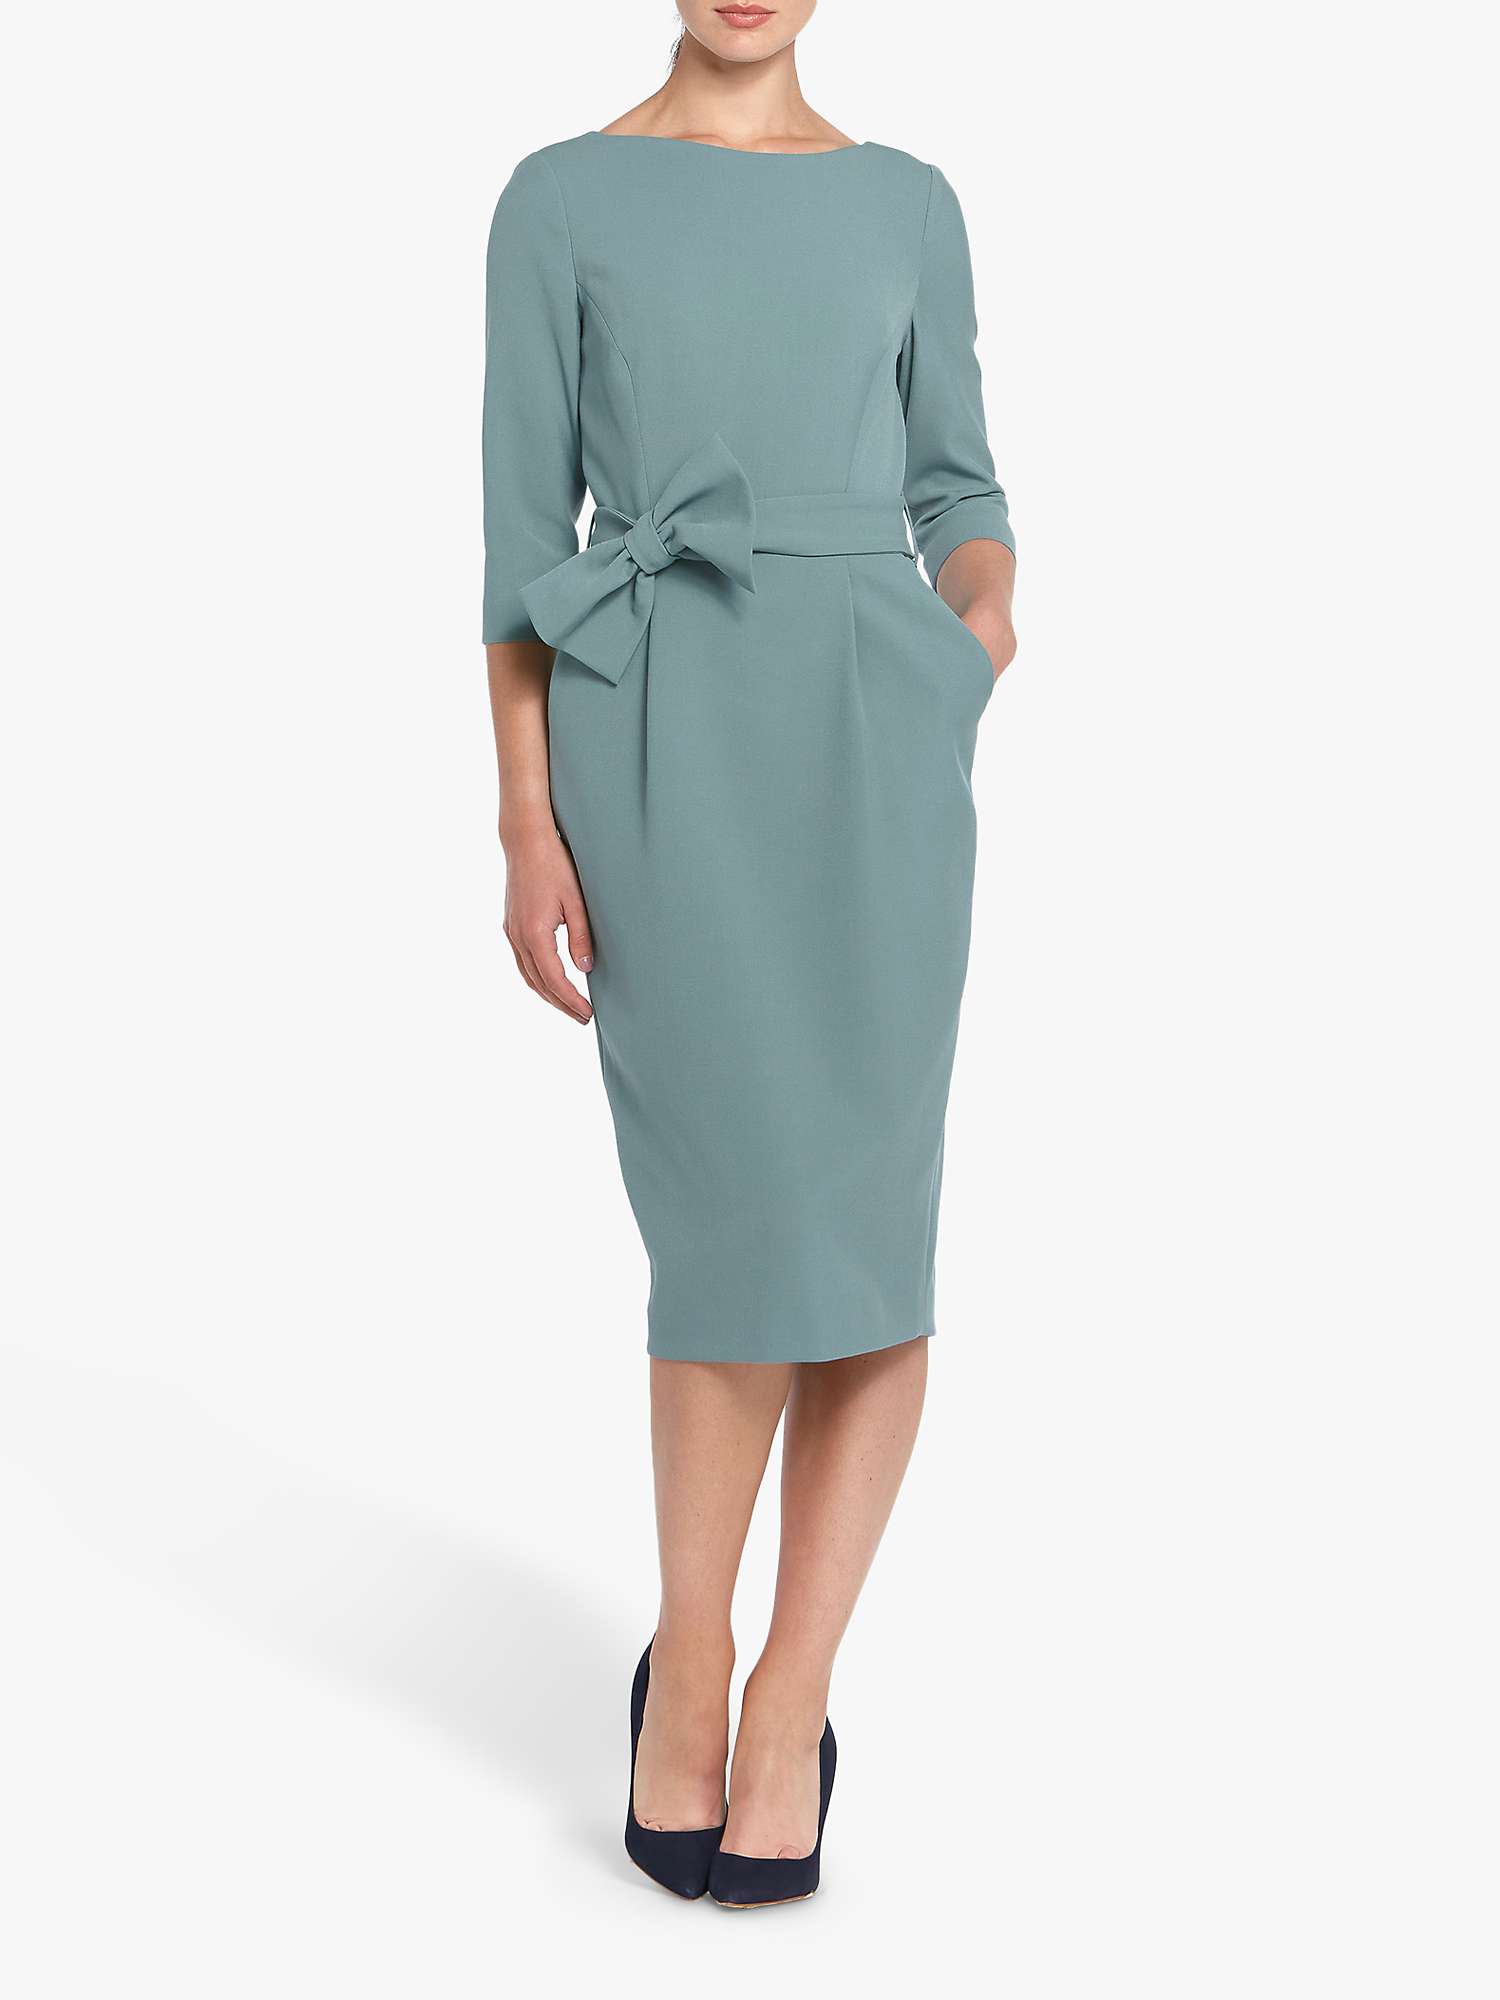 Buy Helen McAlinden Beau Light Midi Dress Online at johnlewis.com